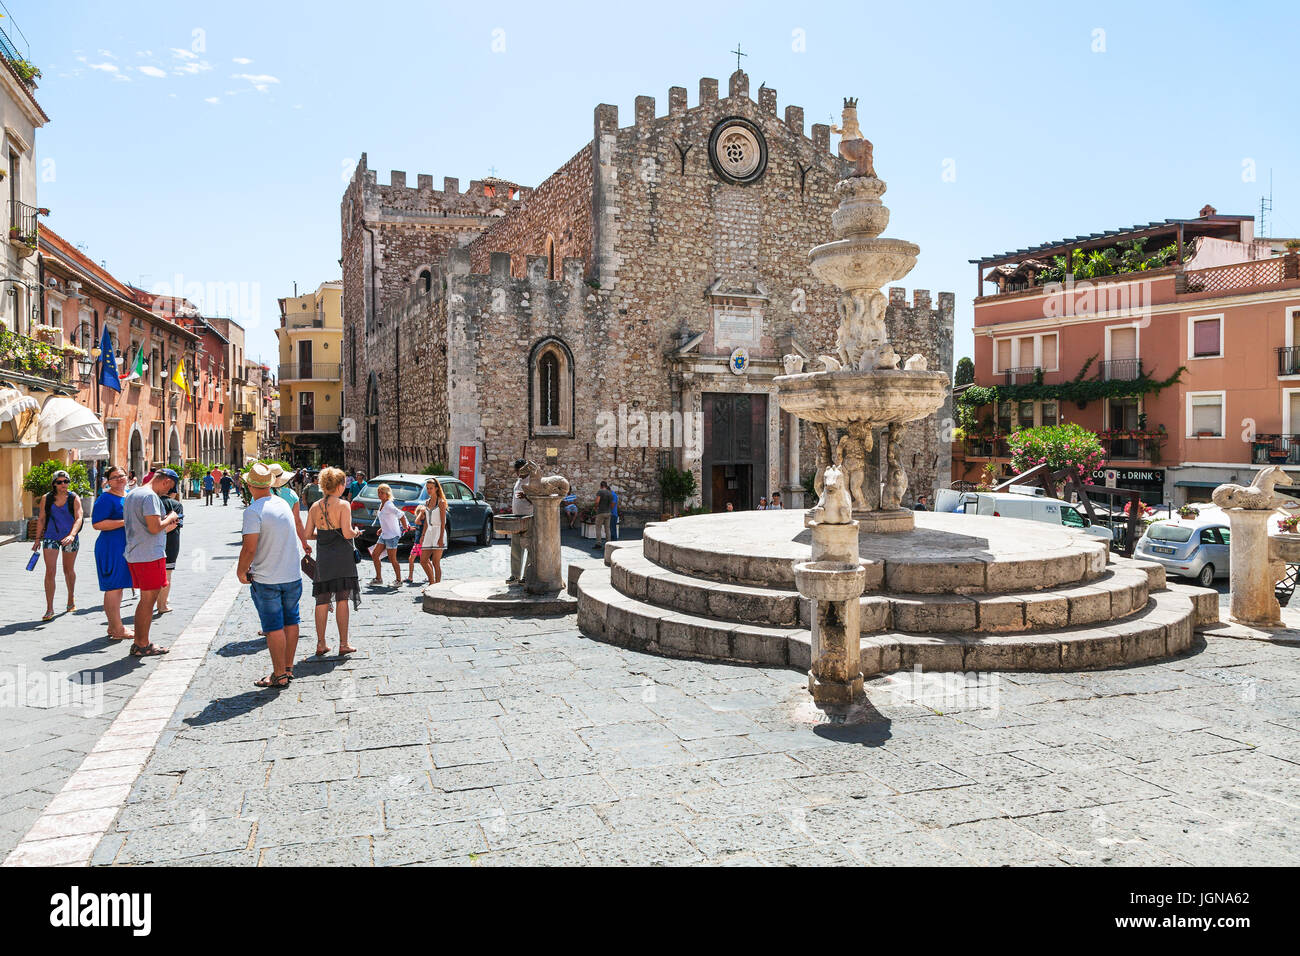 TAORMINA, ITALY - JUNE 29, 2017: people on Piazza dell Duomo near fountain in Taormina city. Taormina is resort town on Ionian Sea in Sicily Stock Photo